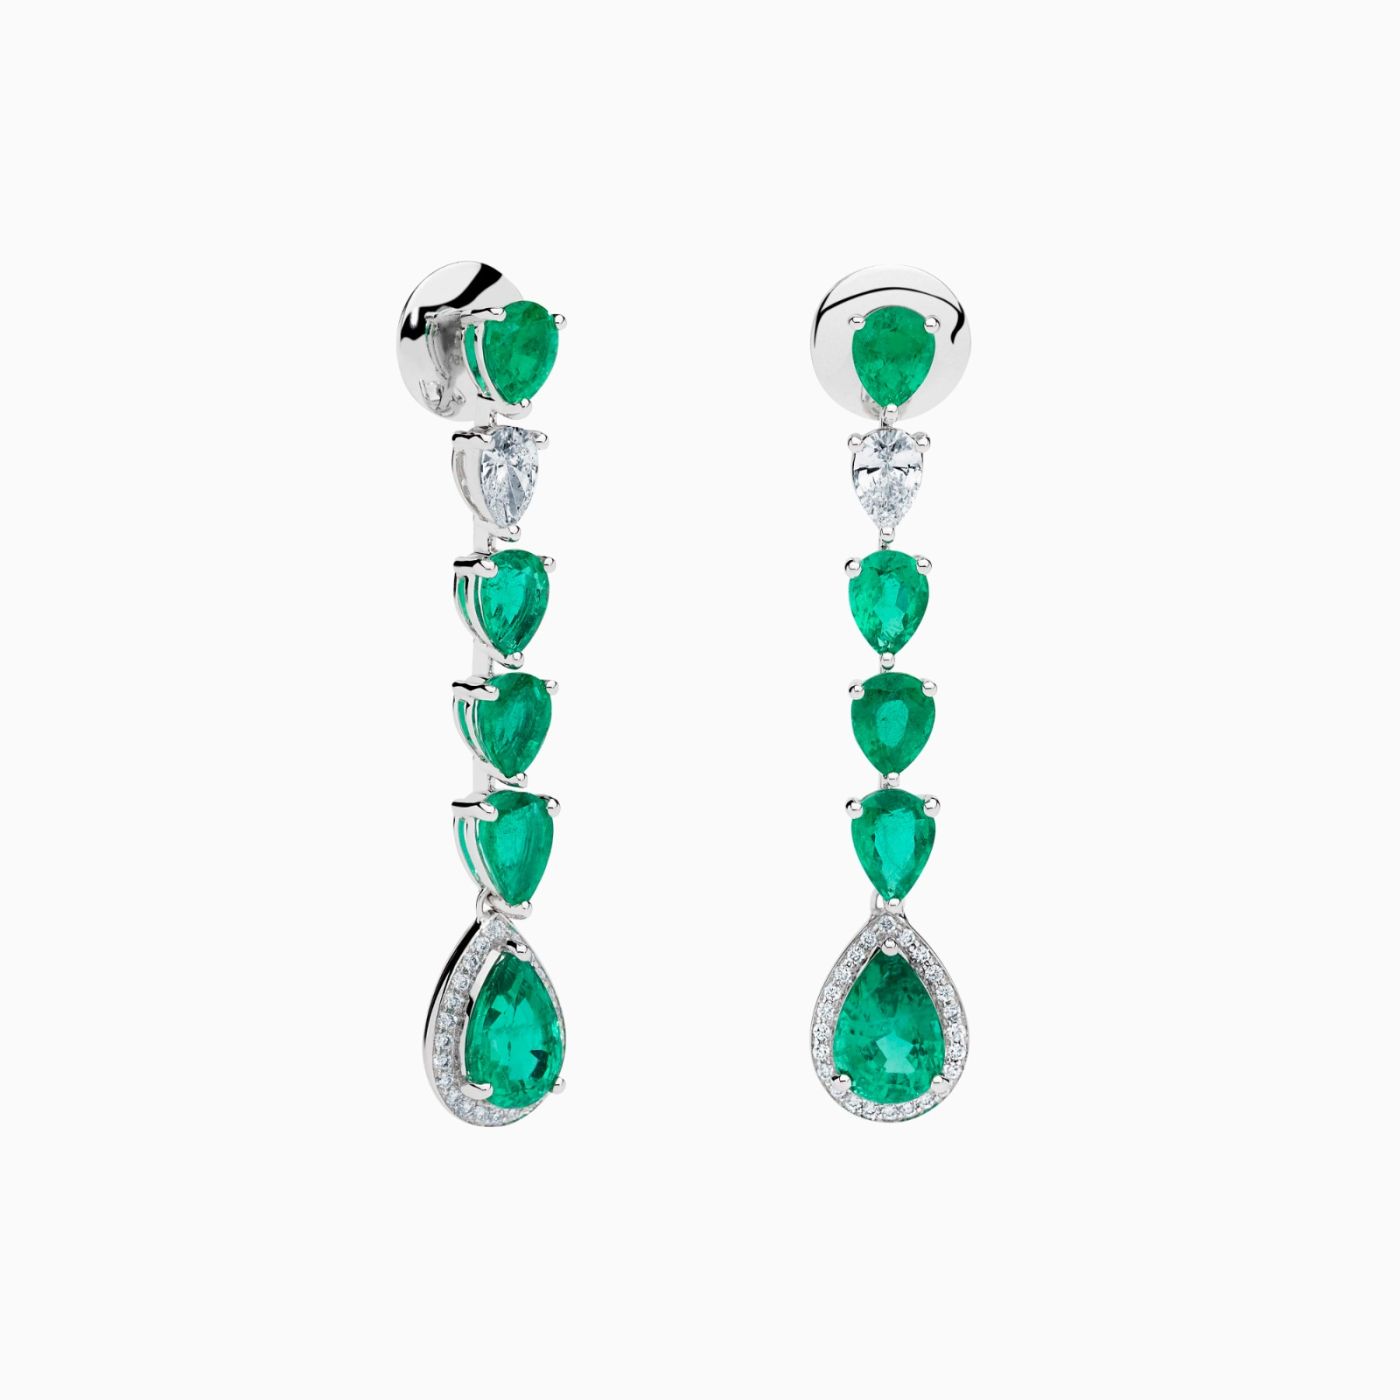 Long earrings of emeralds and diamonds